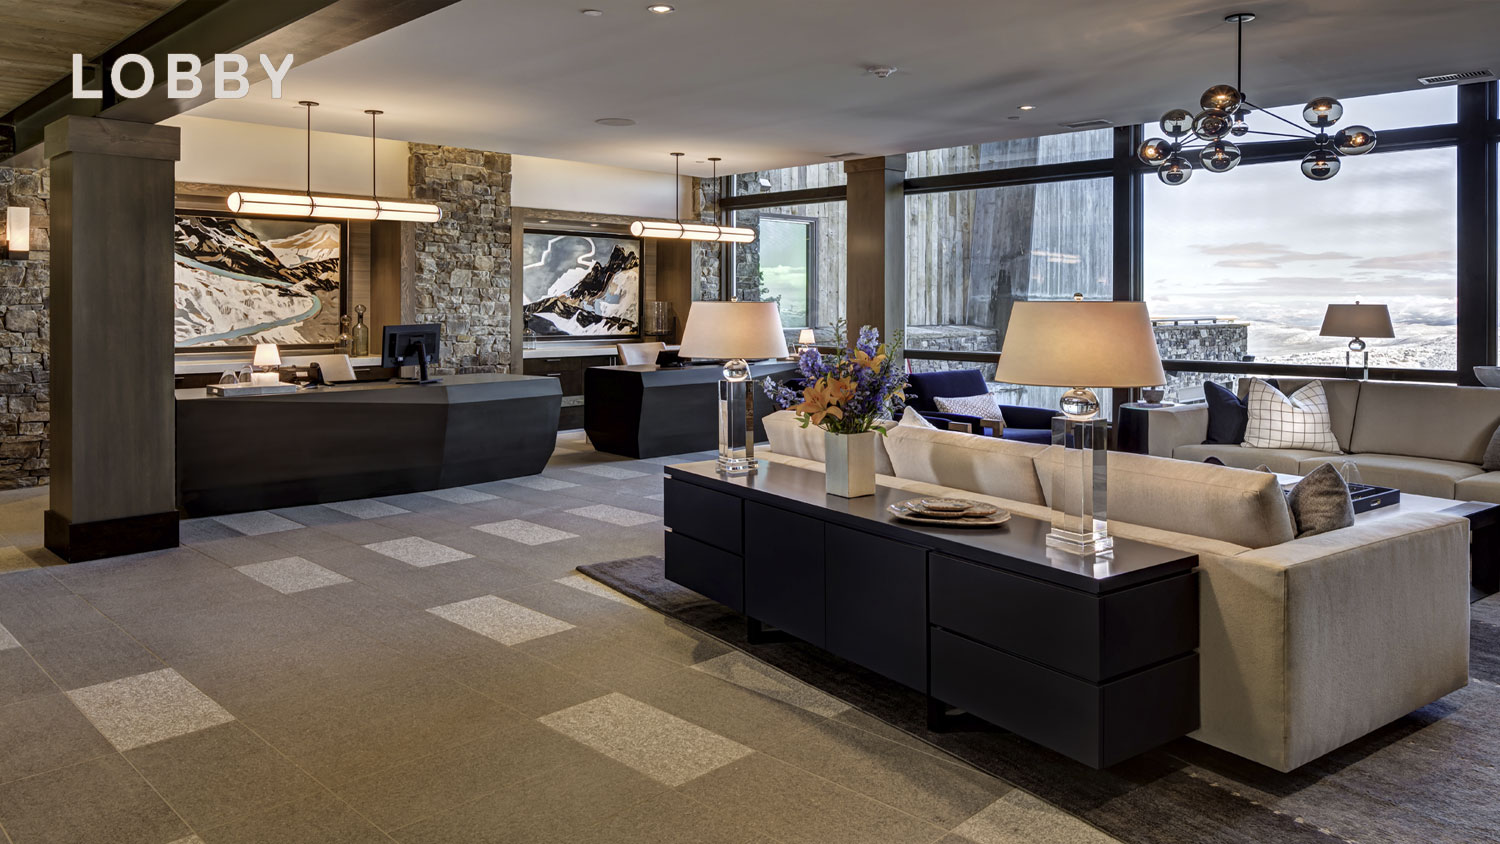 Lobby at the new Stein Eriksen Residences luxury Park City rentals